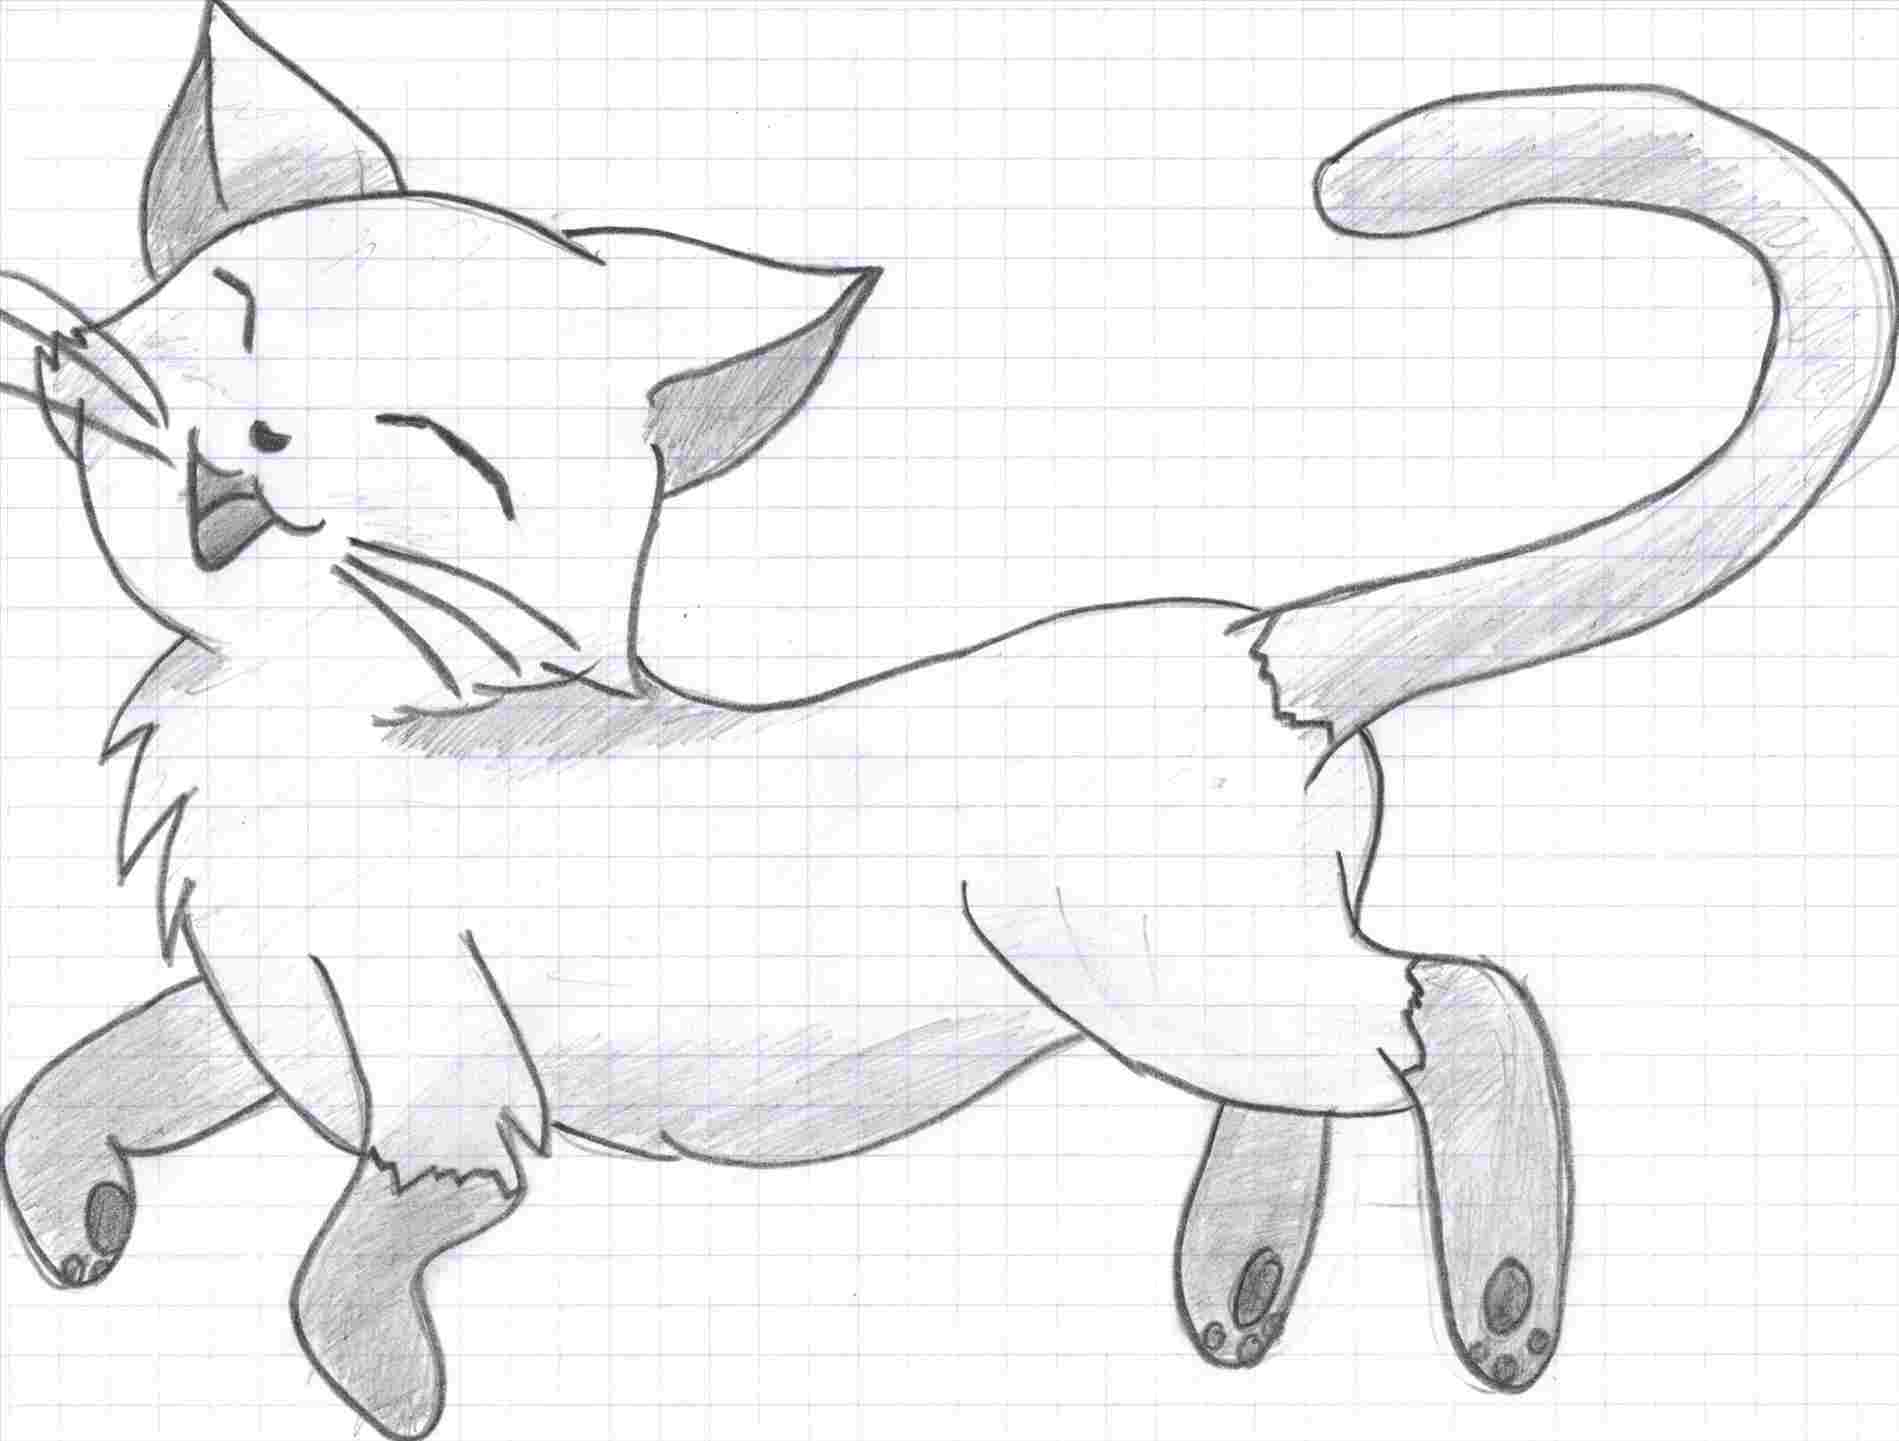 Cute Cat Drawing Easy at Explore